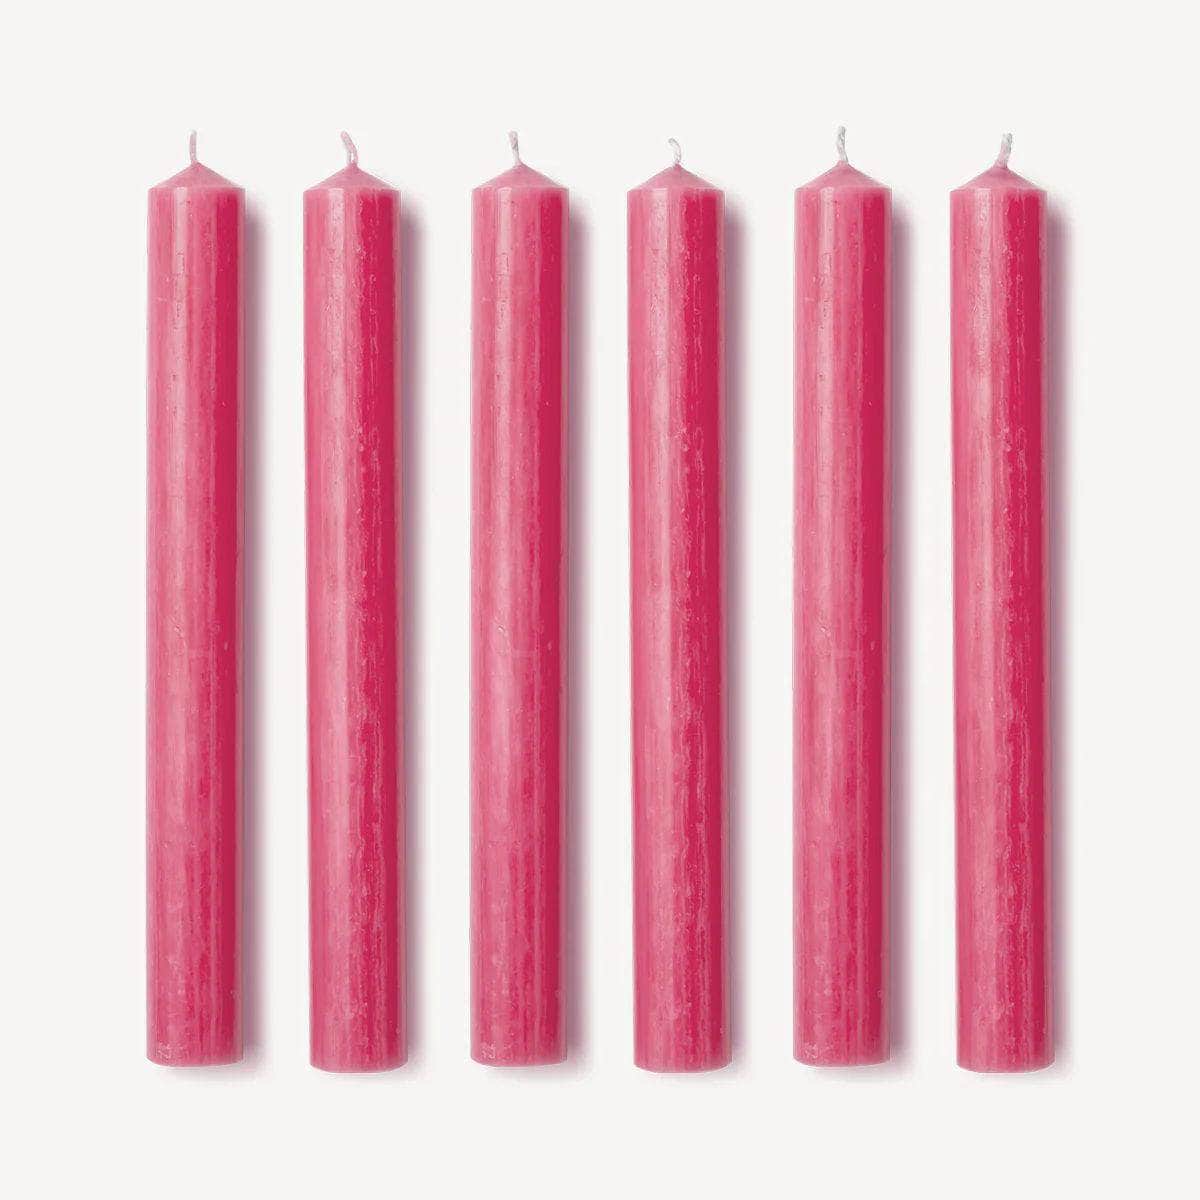 Raspberry Pink Dinner Candles